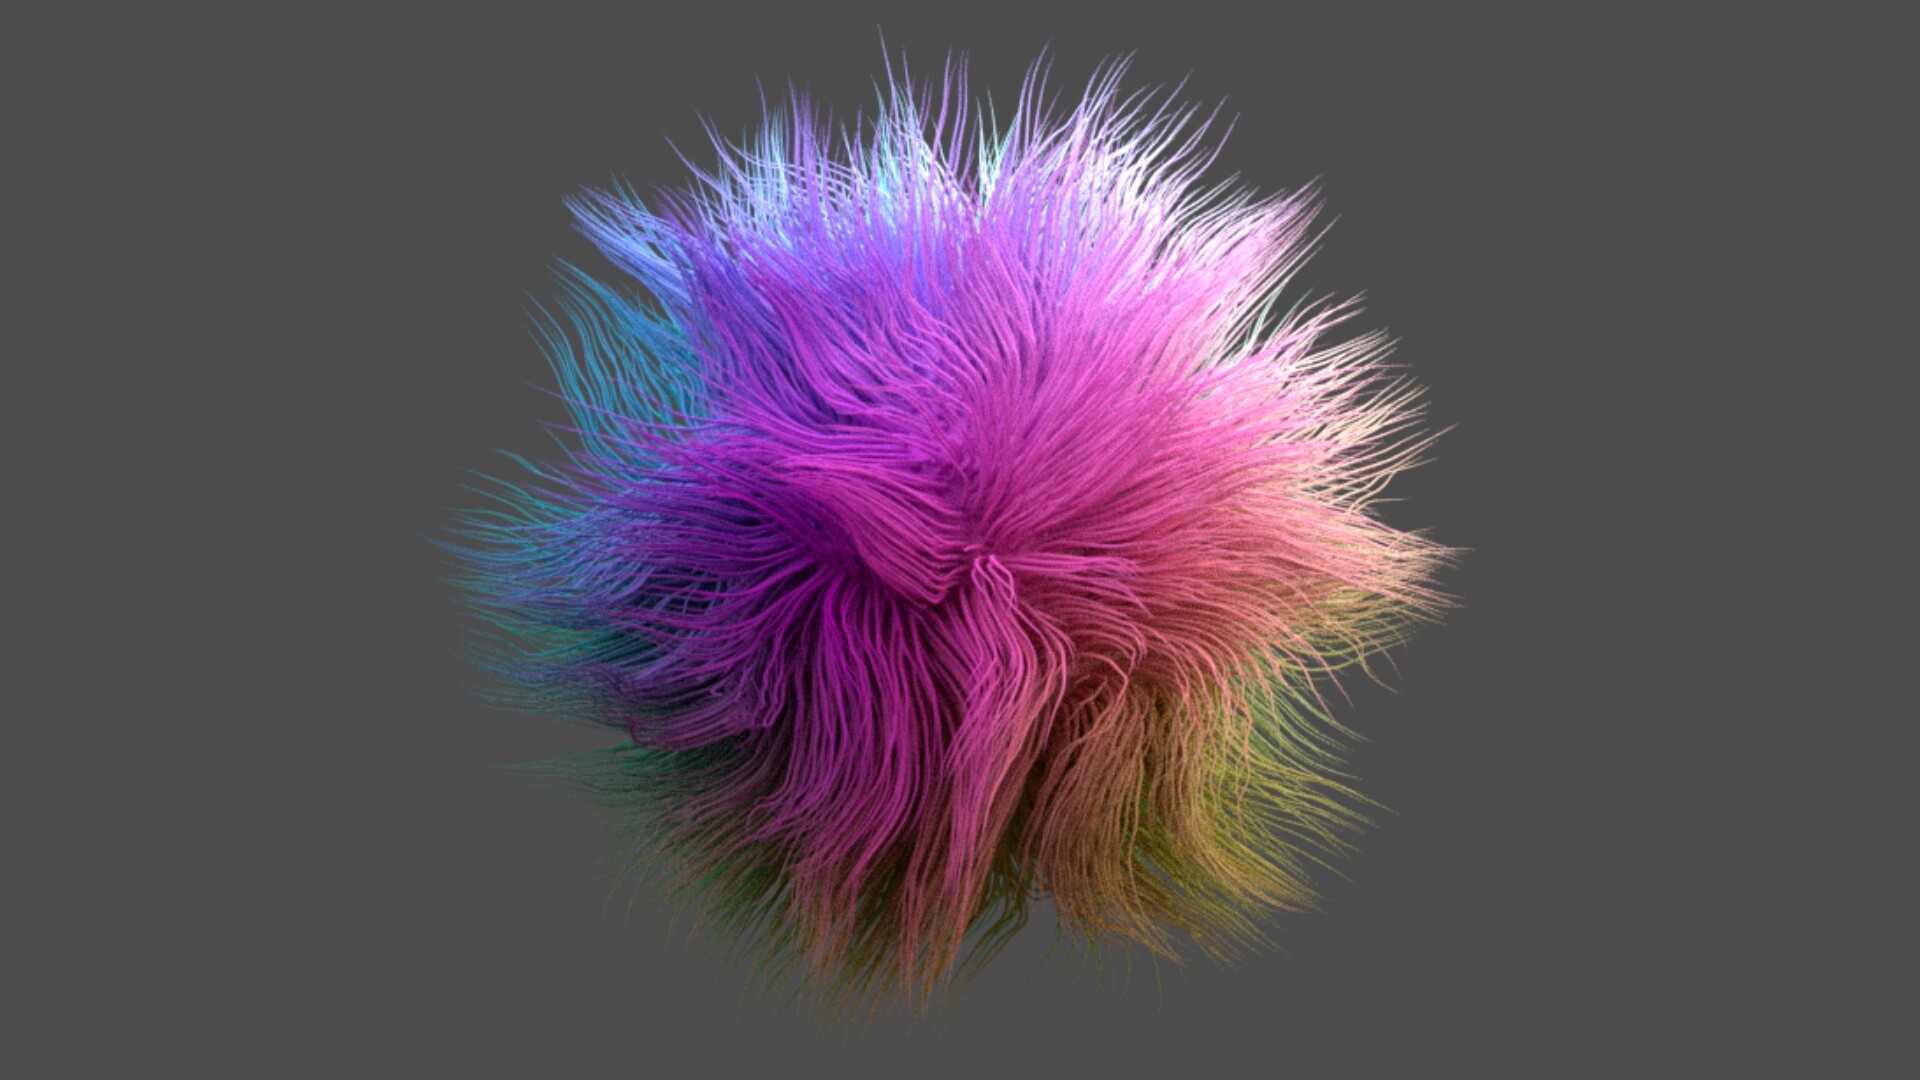 ArtStation - Hairy ball